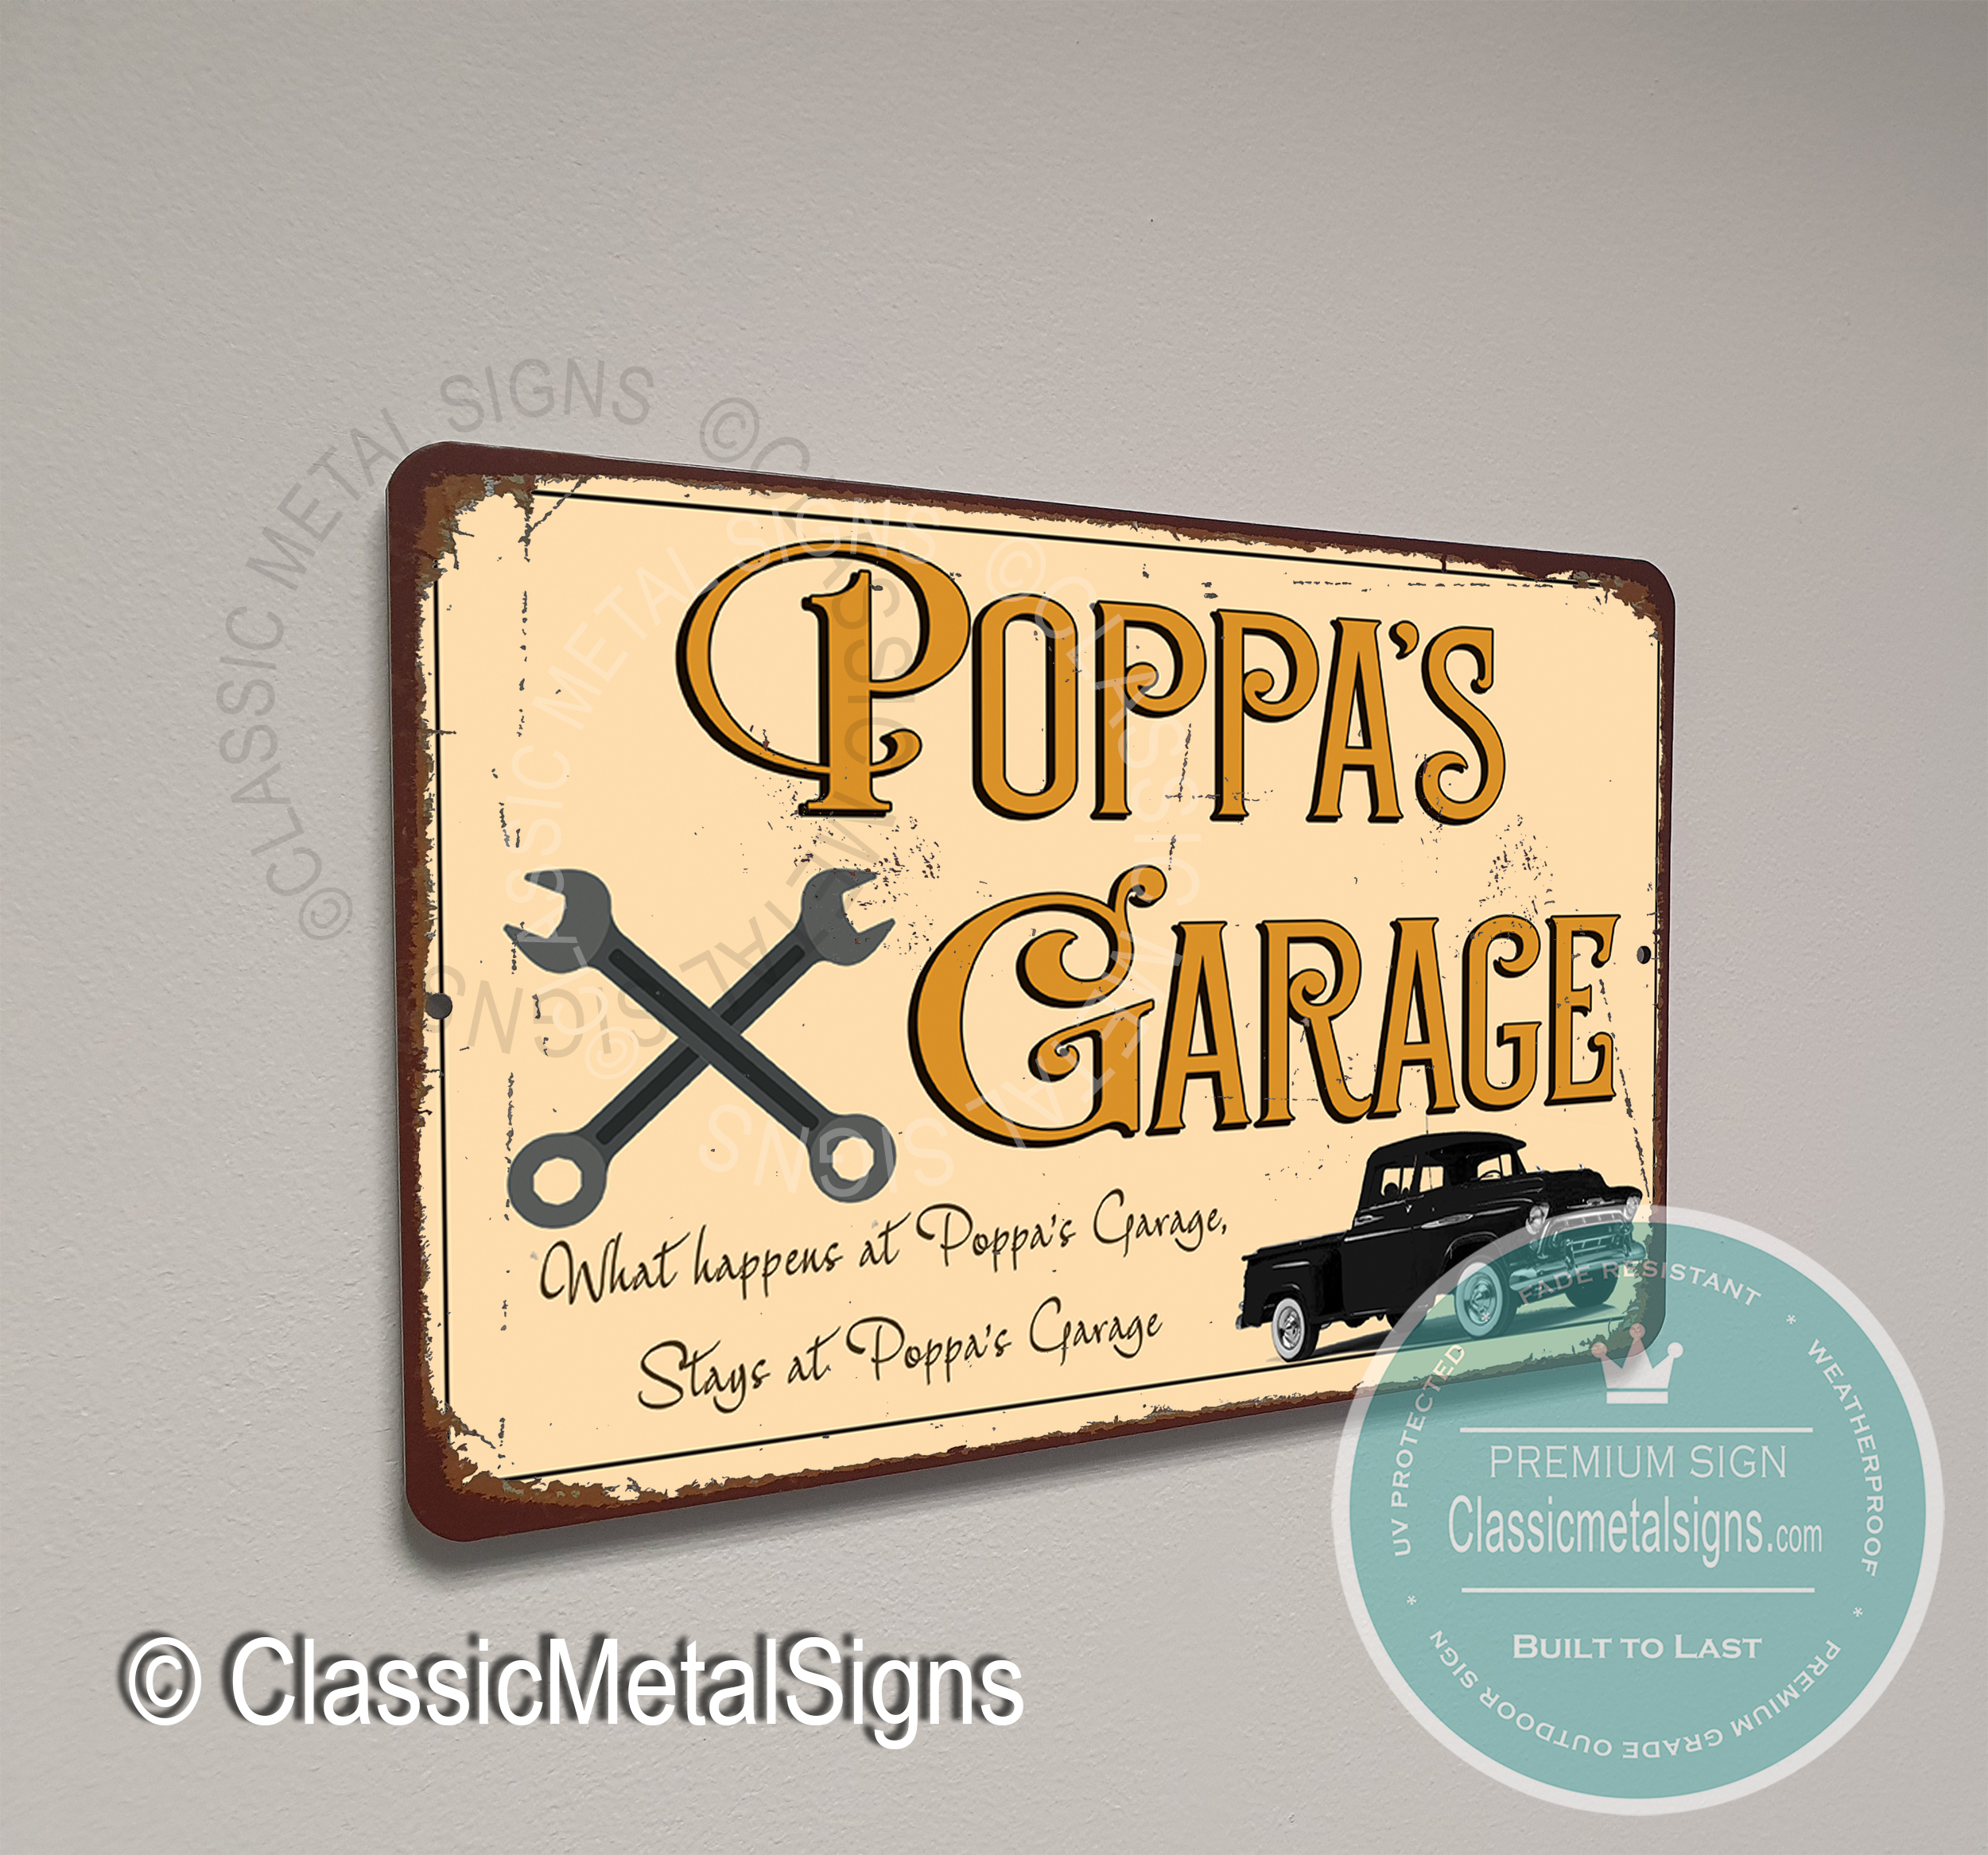 Poppa’s Garage Signs